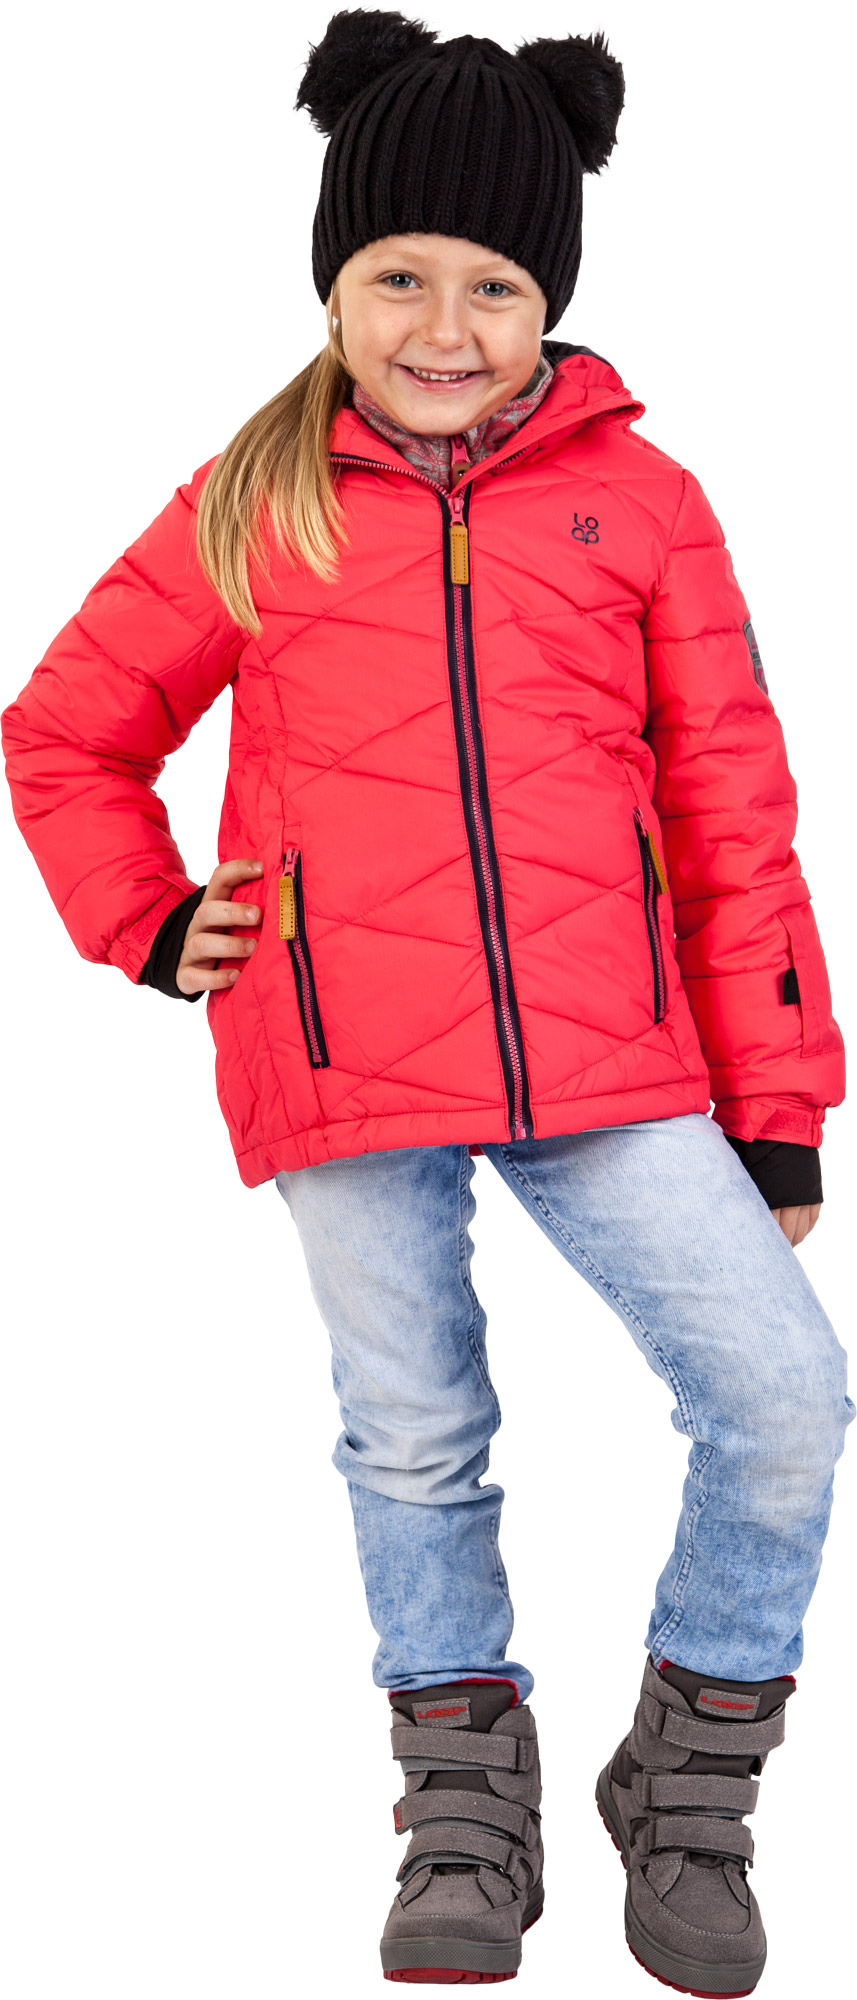 Kids’ skiing jacket